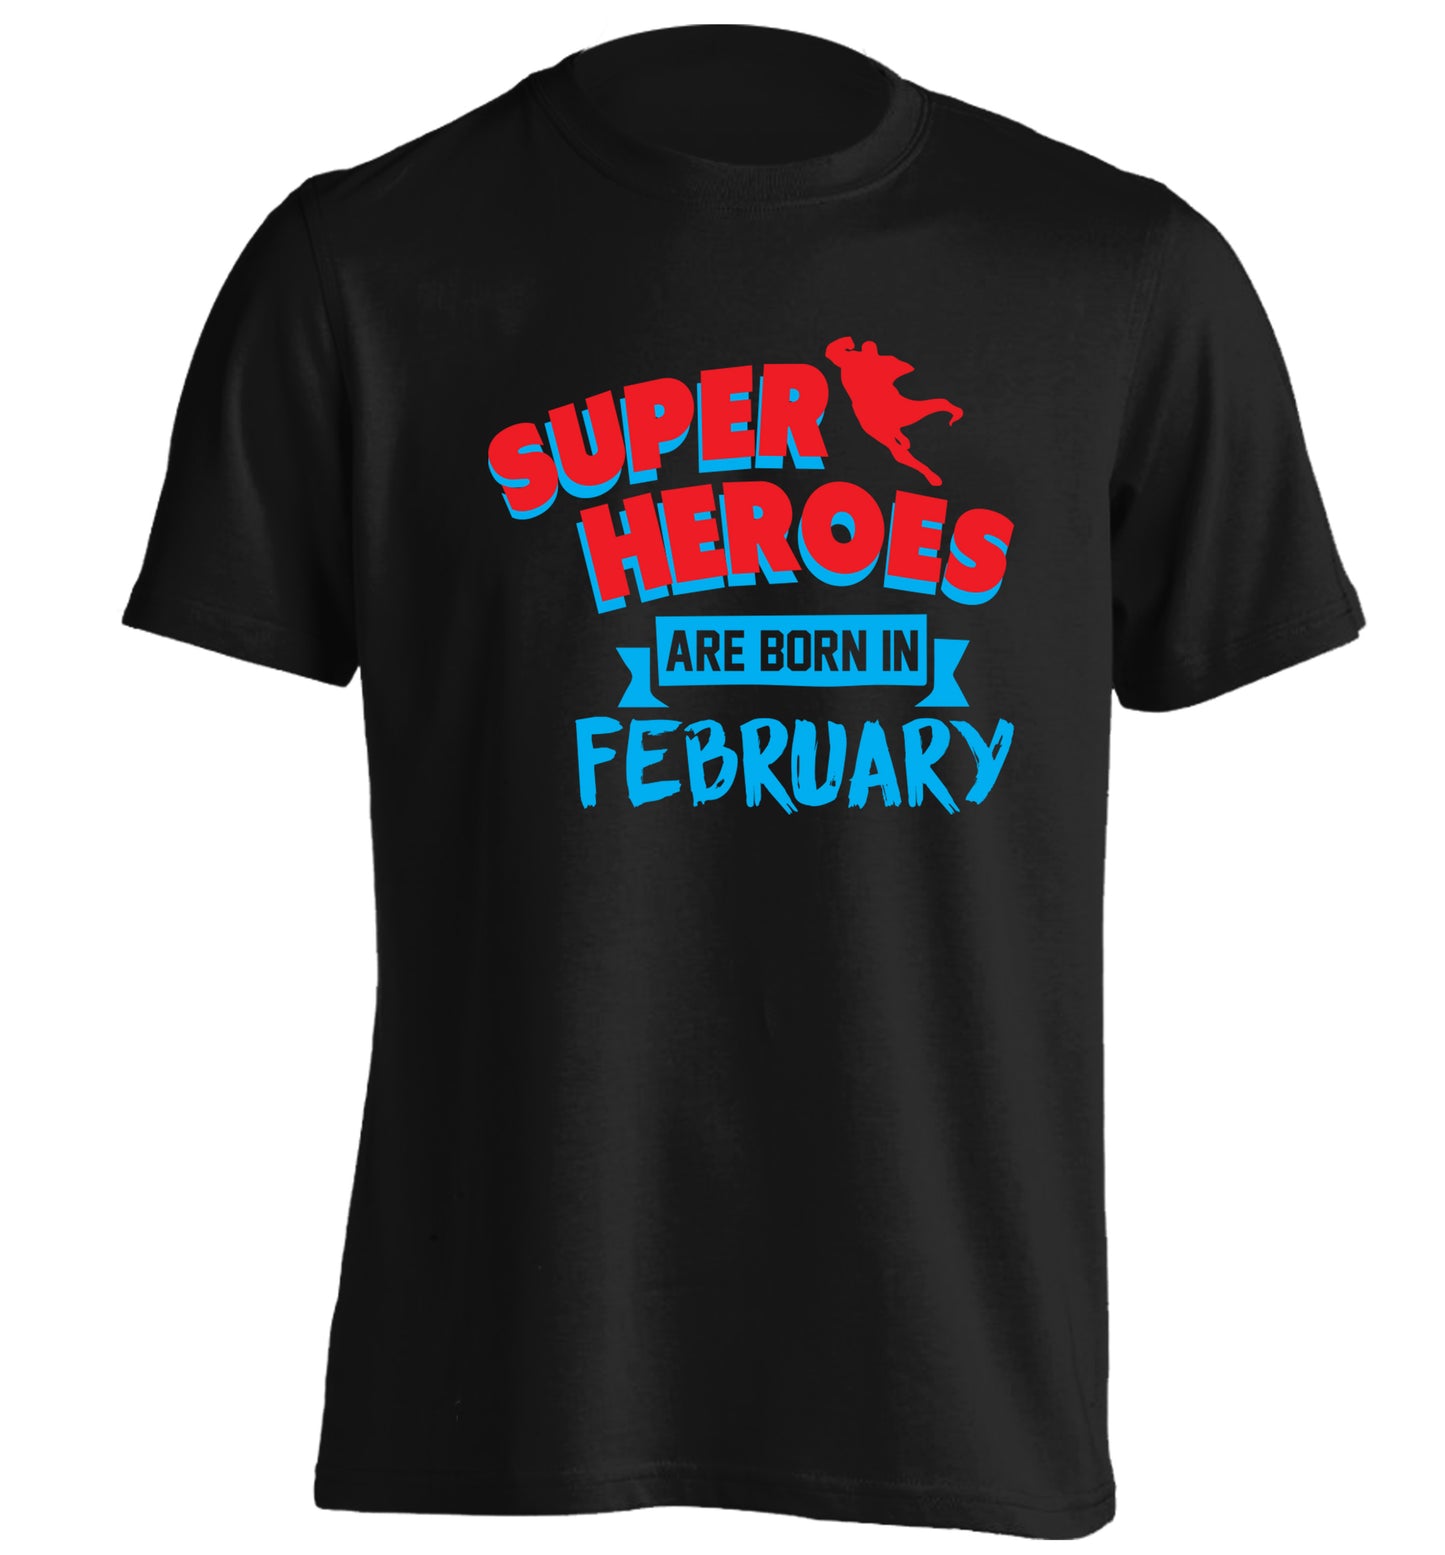 superheroes are born in February adults unisex black Tshirt 2XL